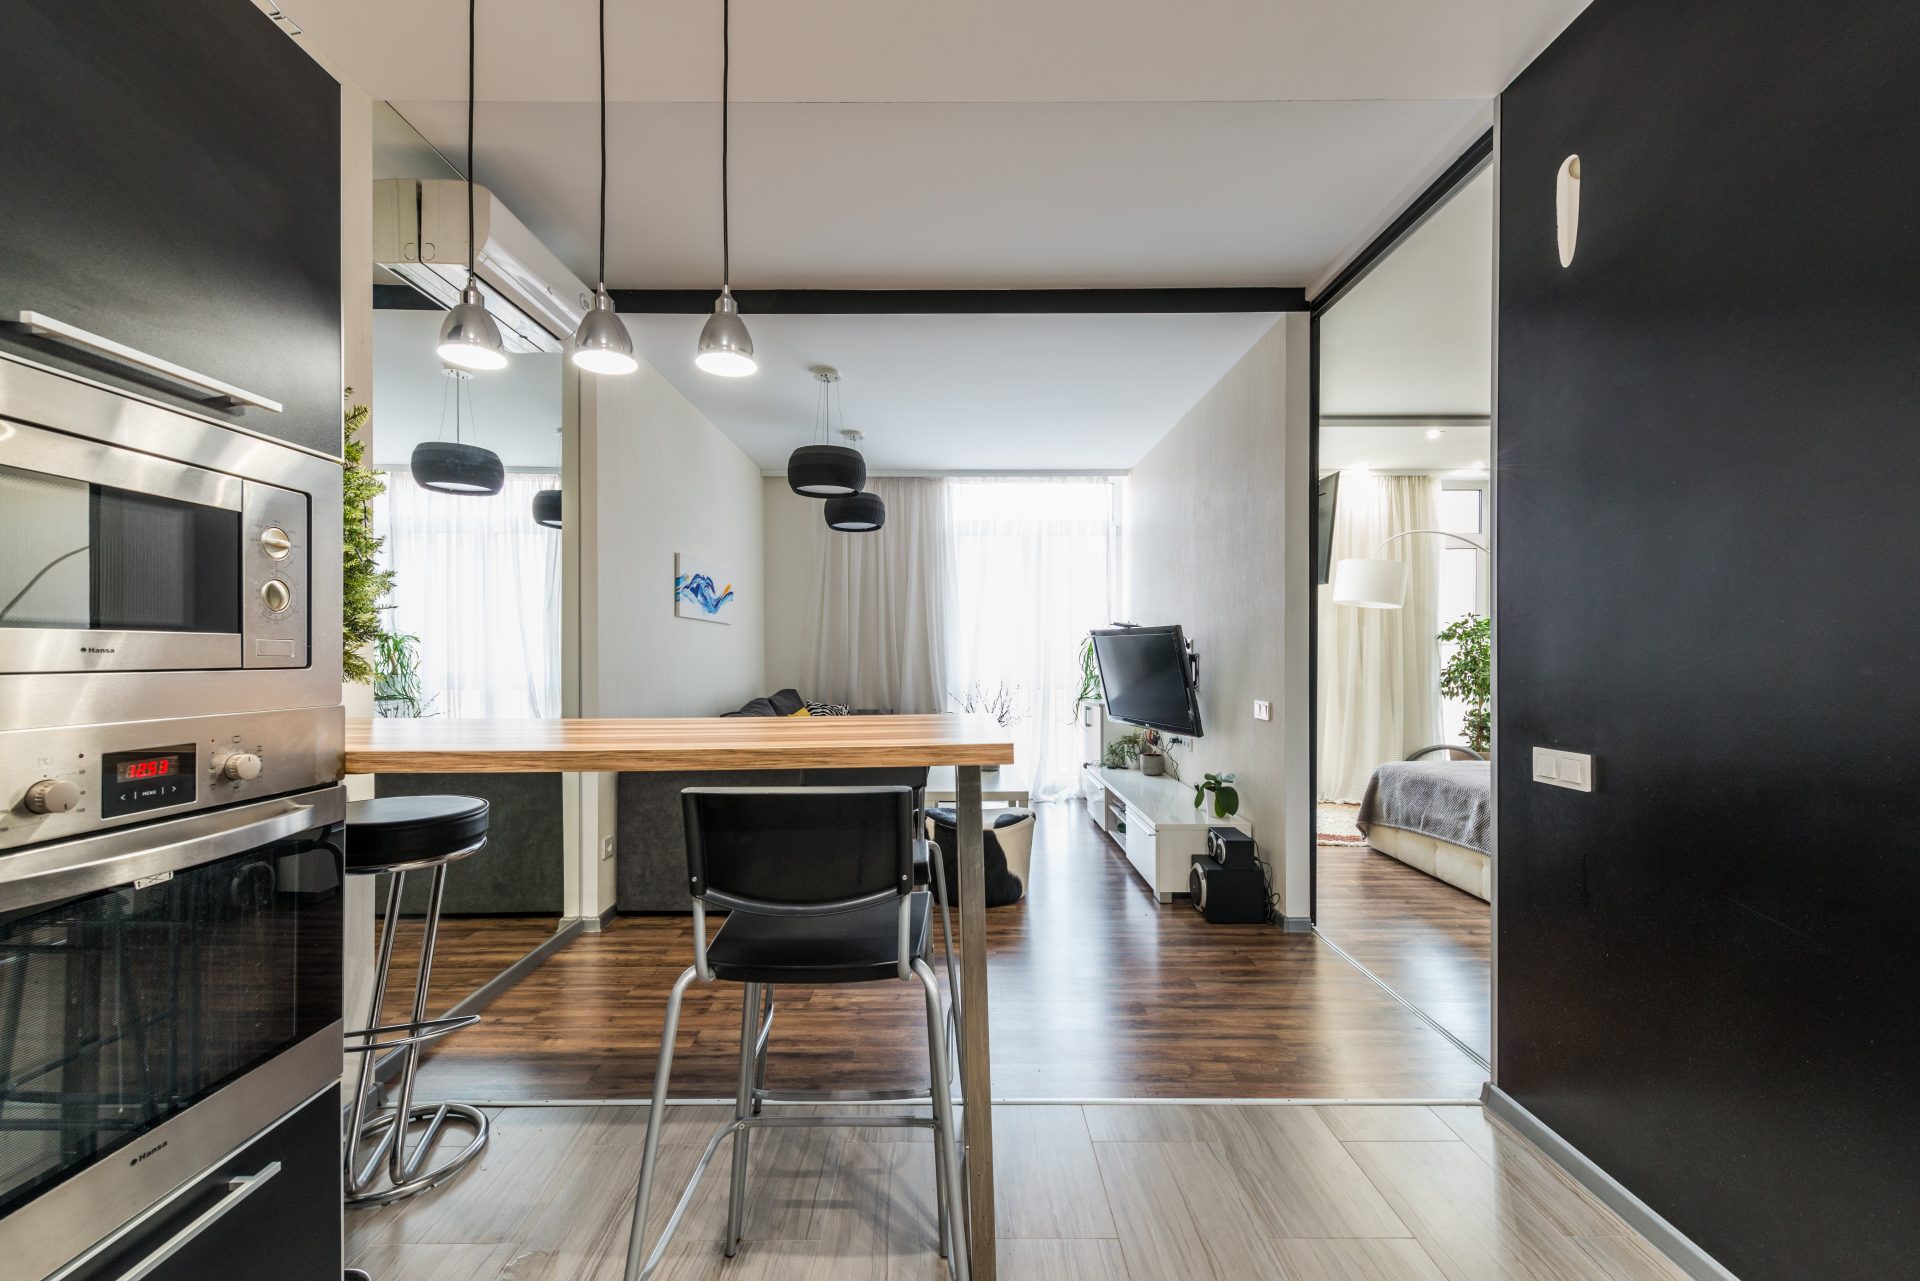 Benefits of Smart Kitchen Design in Apartments